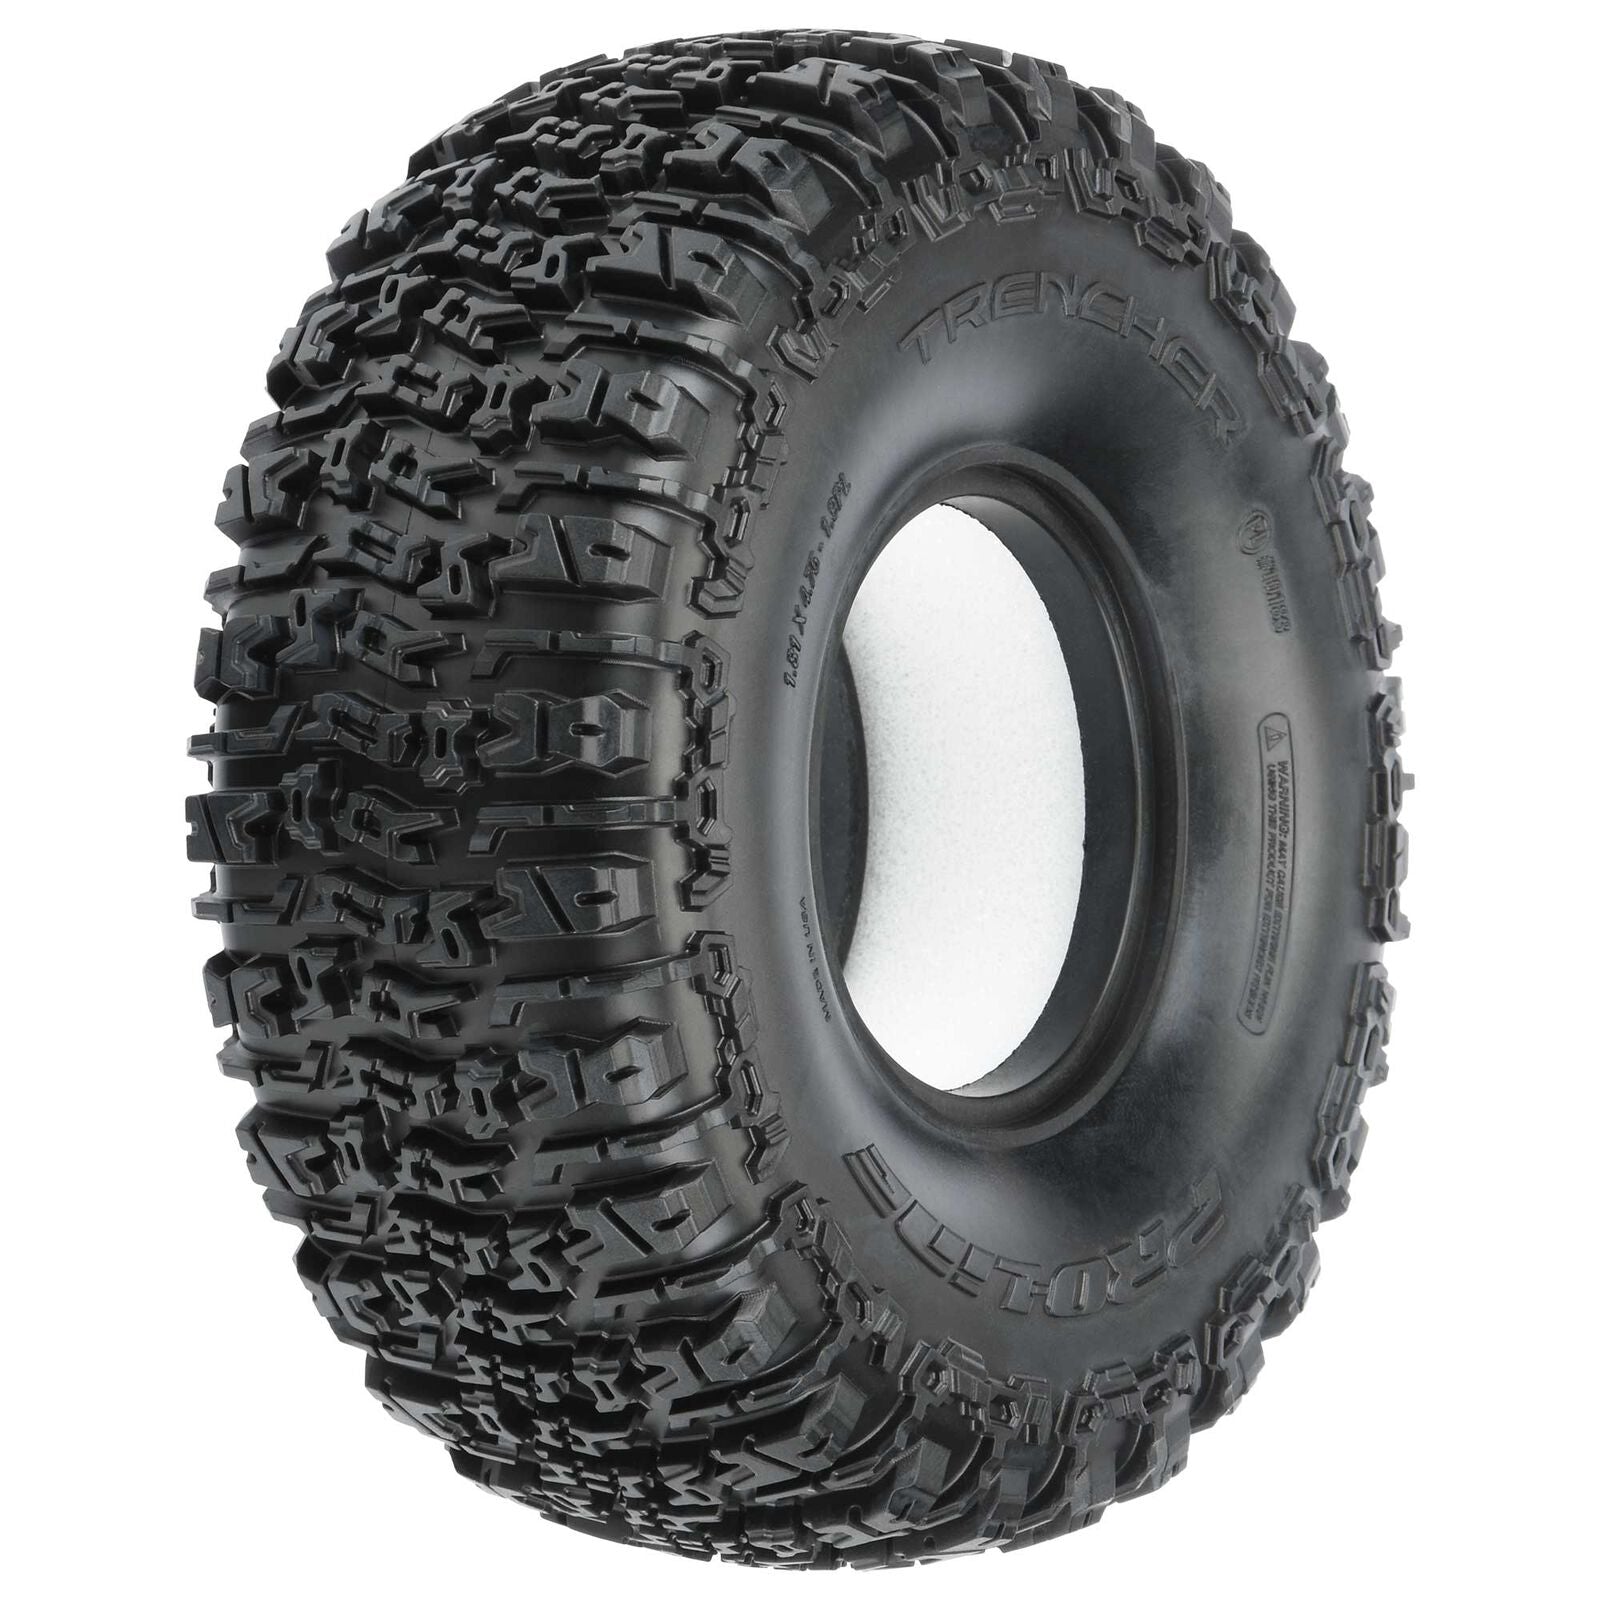 PROLINE 10183-14 Trencher 1.9" G8 Rock Terrain Tires